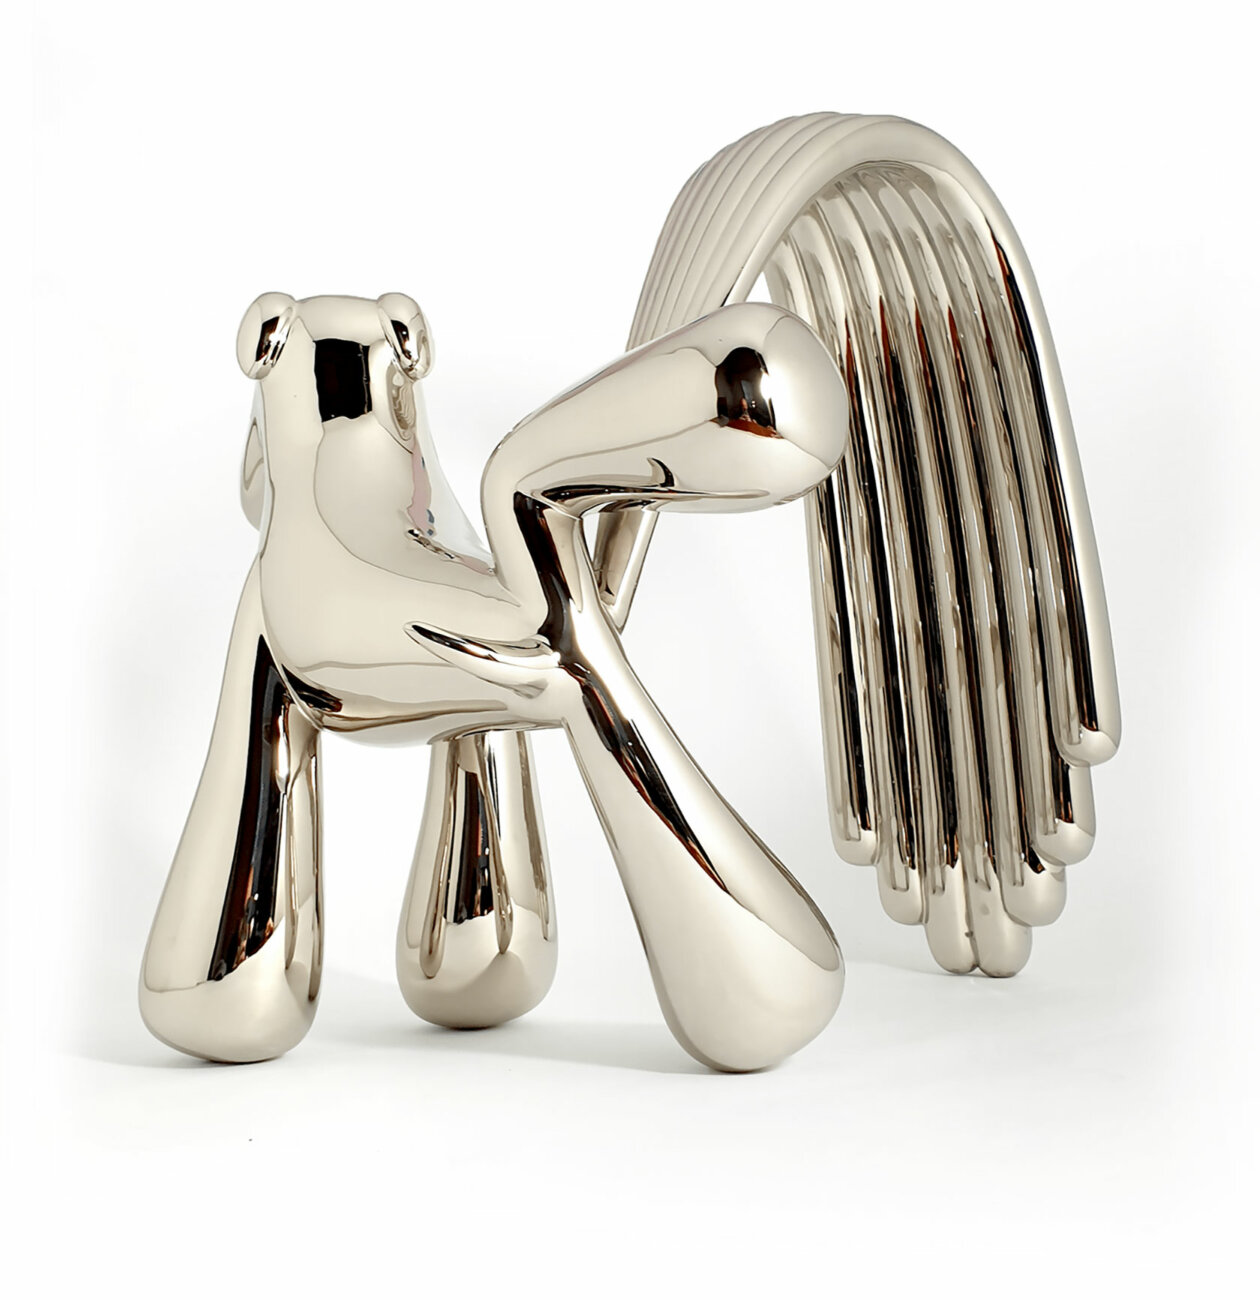 Fun Animal Polished Metal Sculptures By Ferdi B. Dick (8)